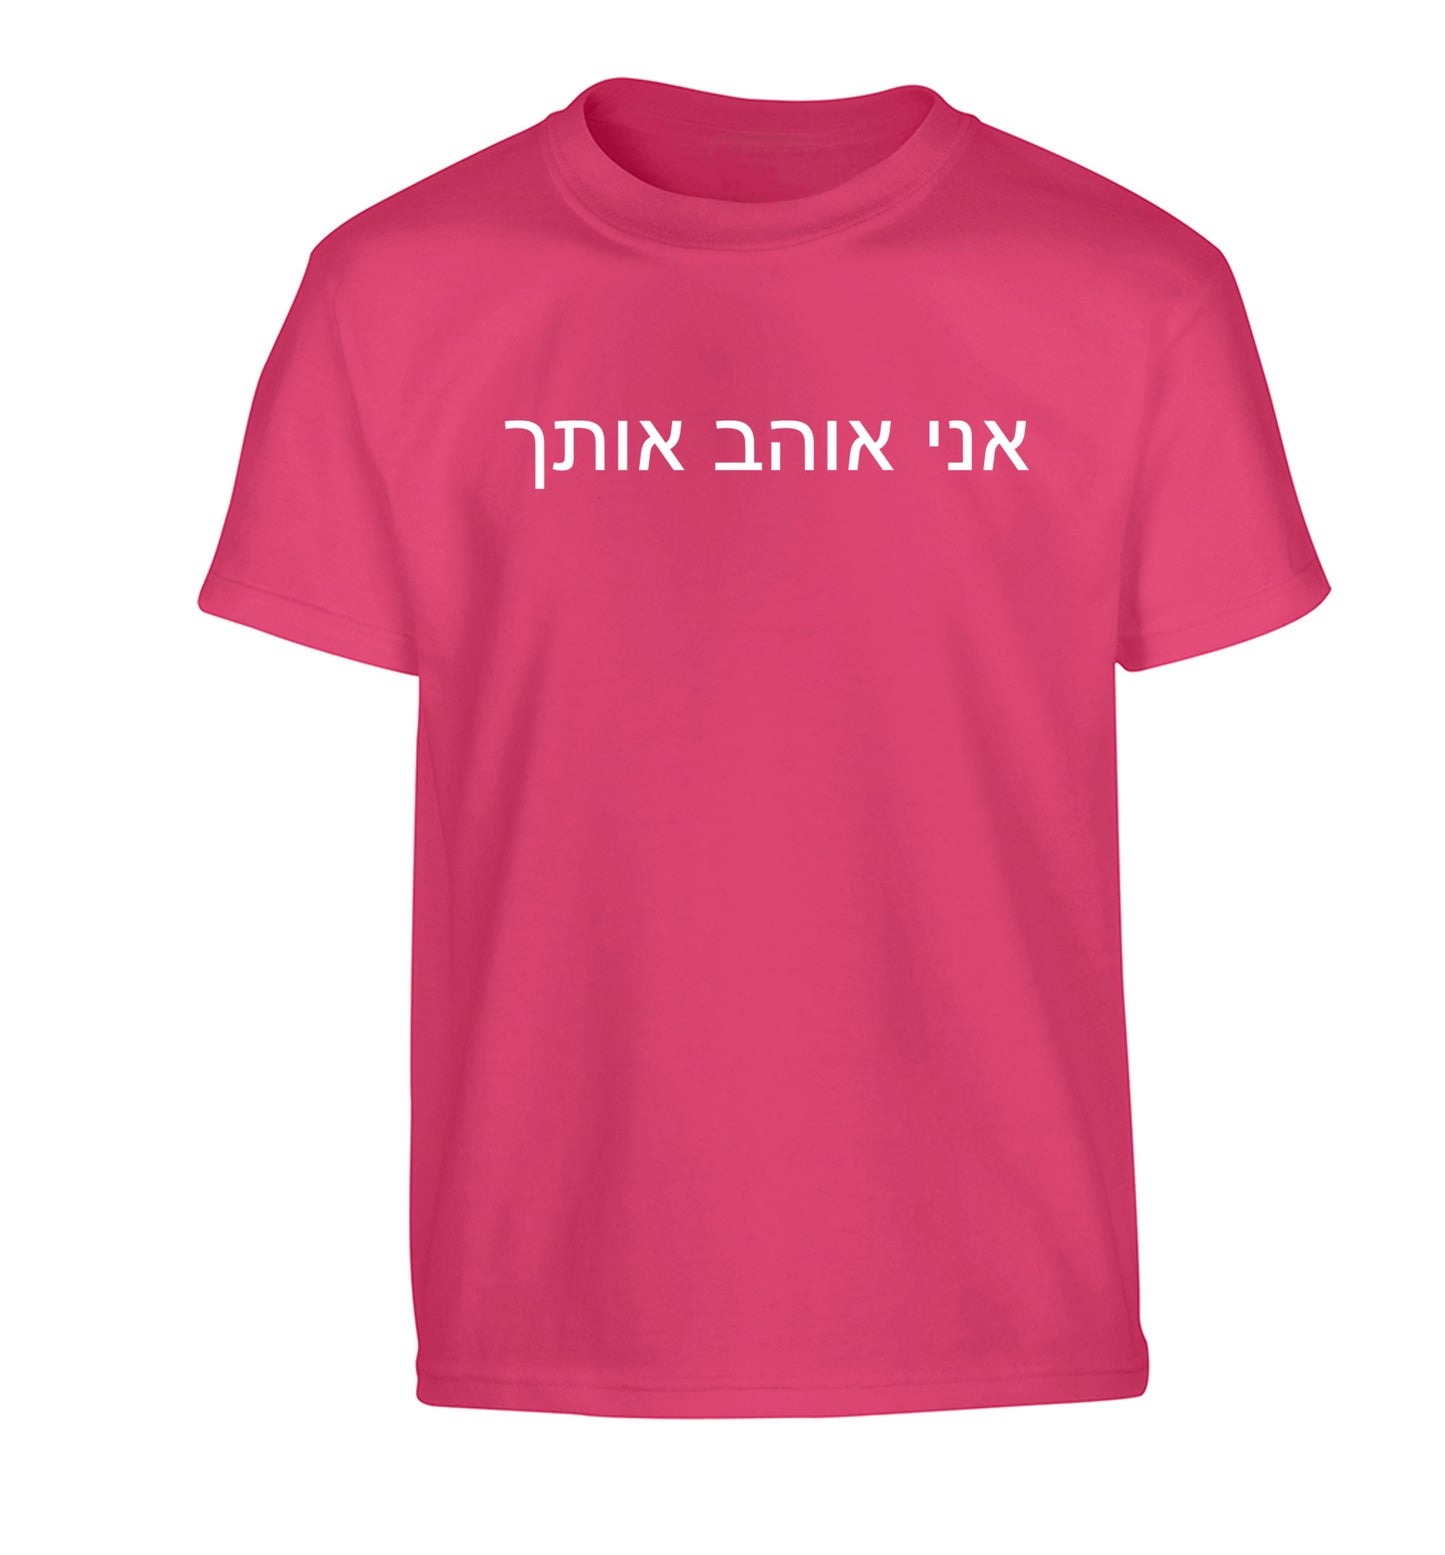 ___ ____ ____ - I love you Children's pink Tshirt 12-13 Years